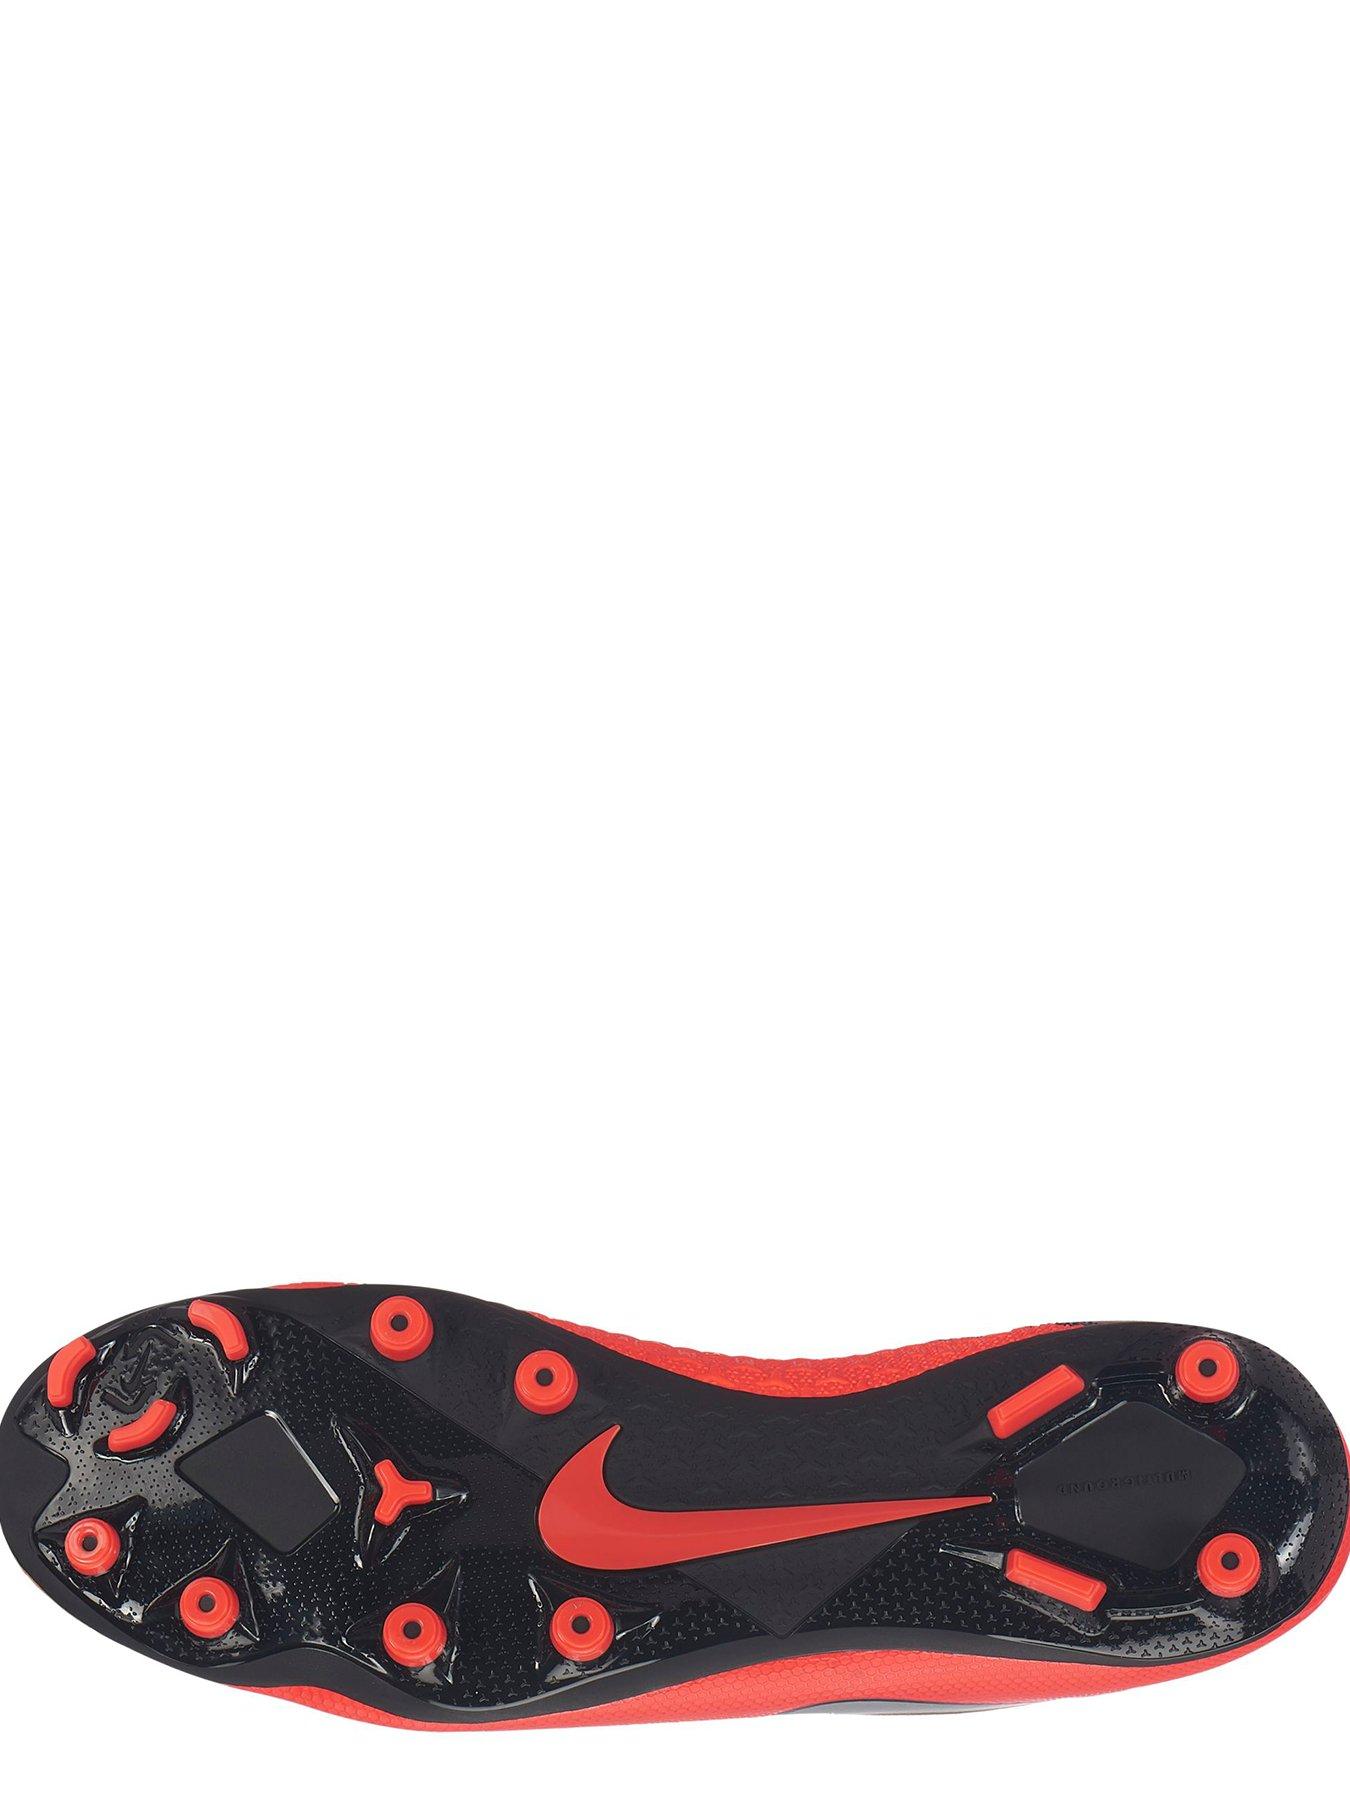 Black Pack Nike Hypervenom Phantom III 2017 18 Boots .